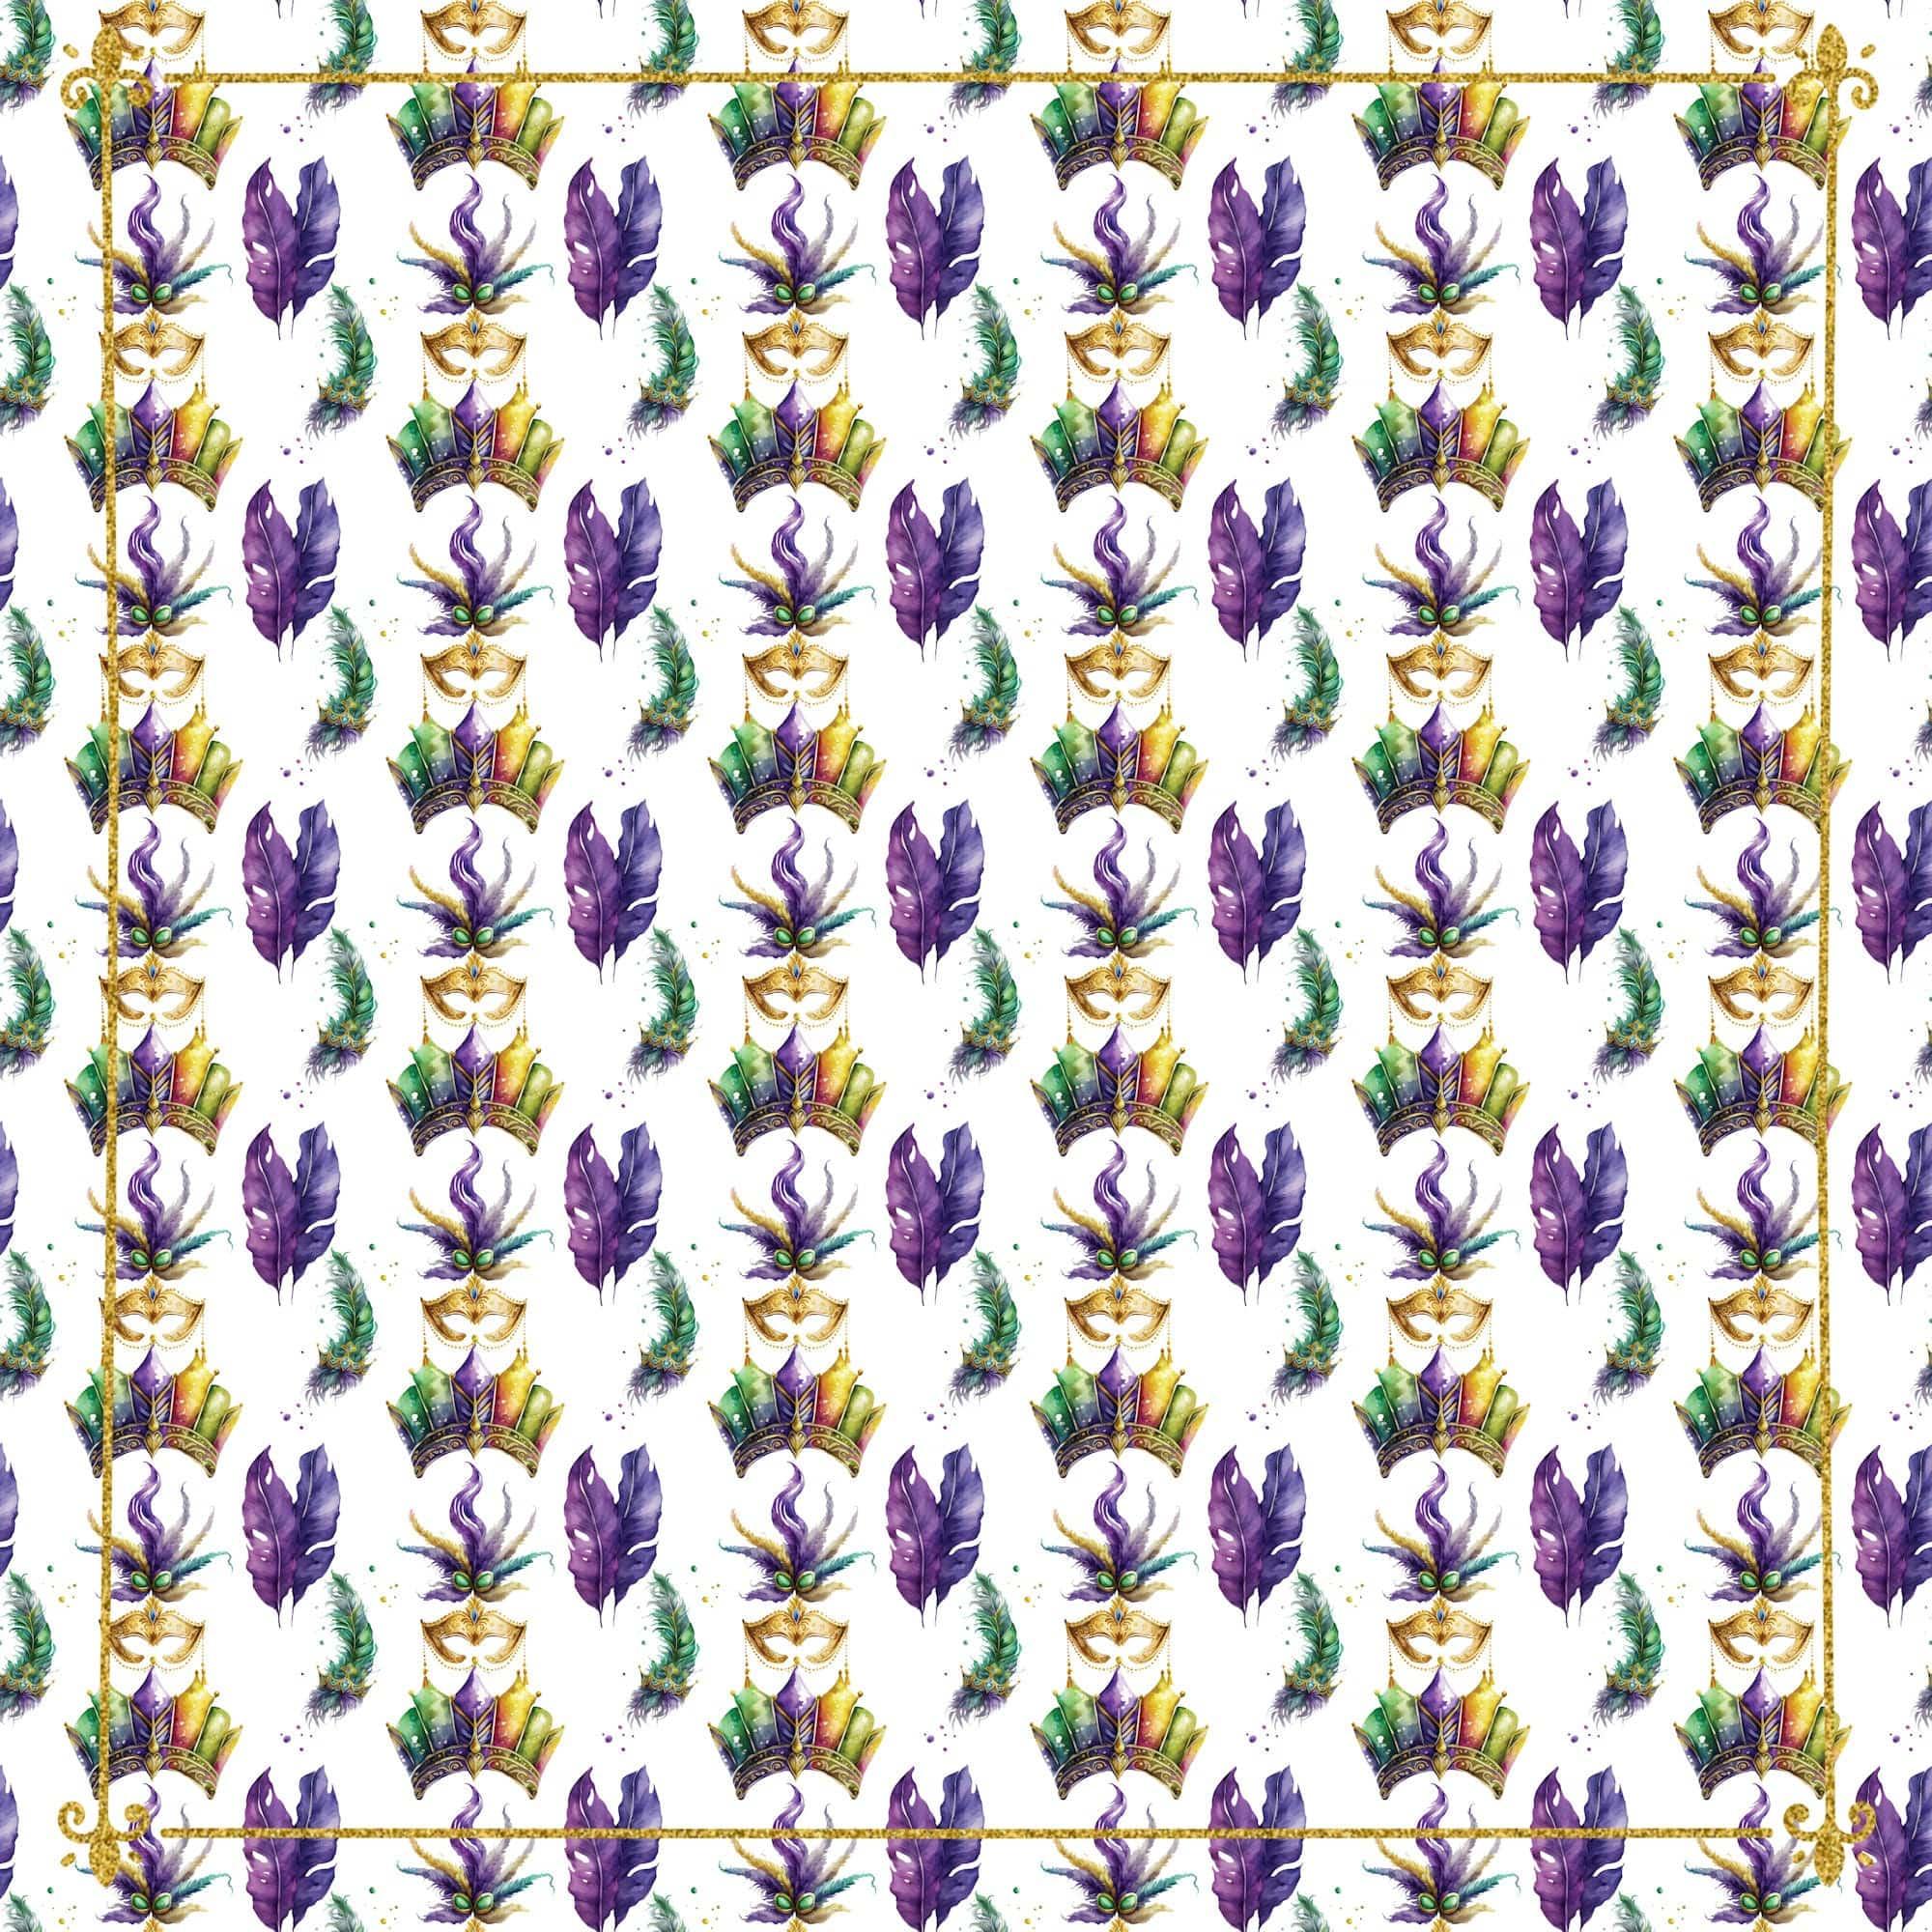 Mardi Gras Collection Fleur De Lis 12 x 12 Double-Sided Scrapbook Paper by SSC Designs - Scrapbook Supply Companies